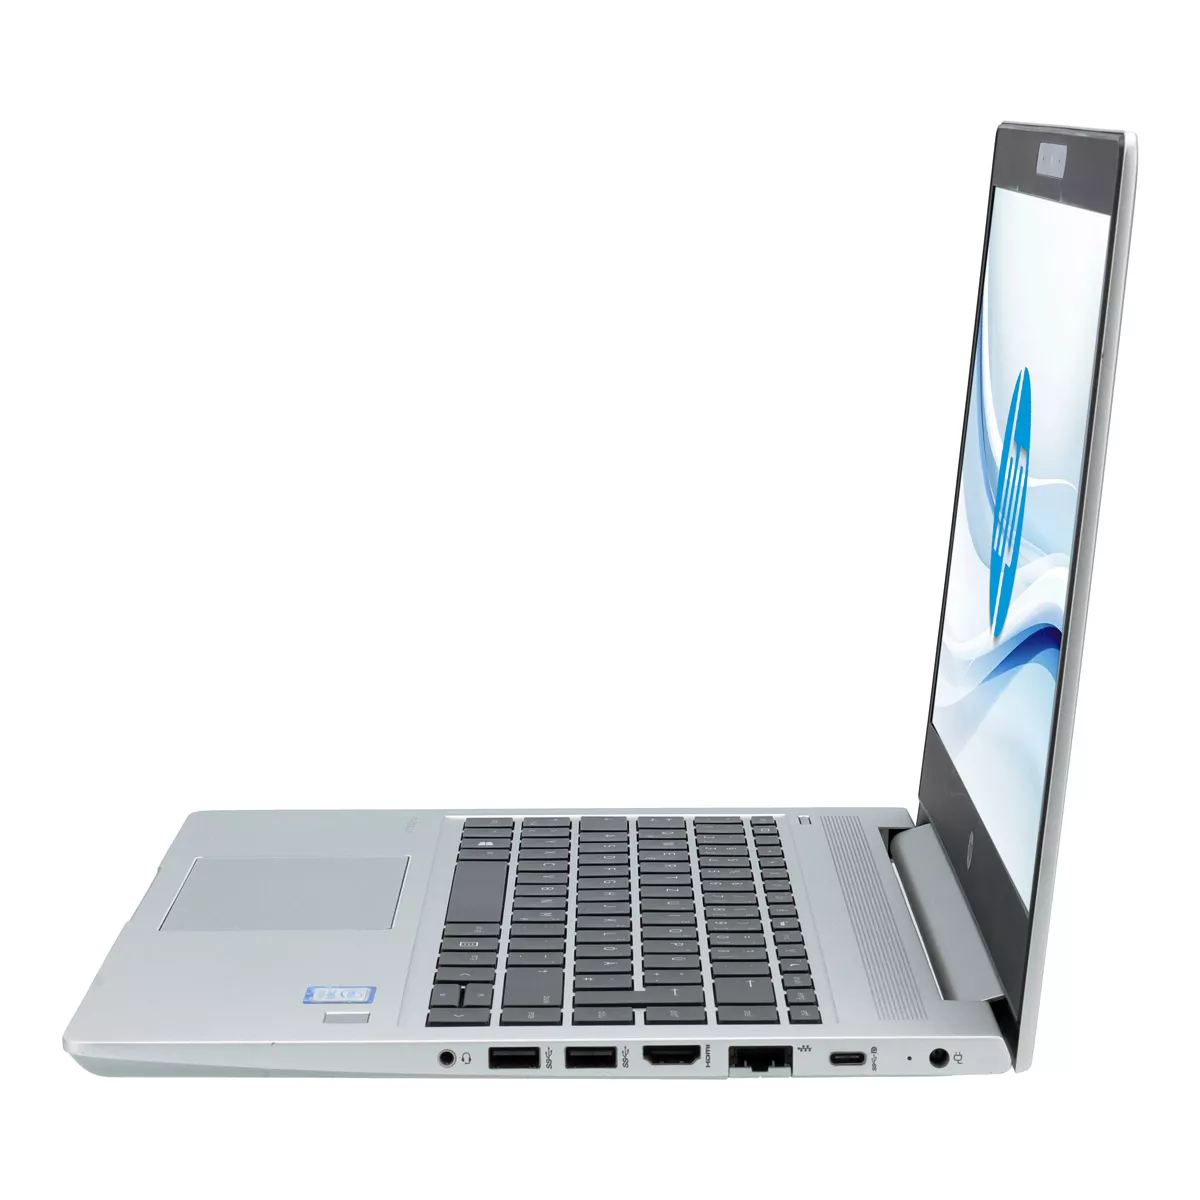 HP ProBook 445R G6 AMD Ryzen 5 3500U 8 GB 240 GB M.2 nVME SSD Webcam A+